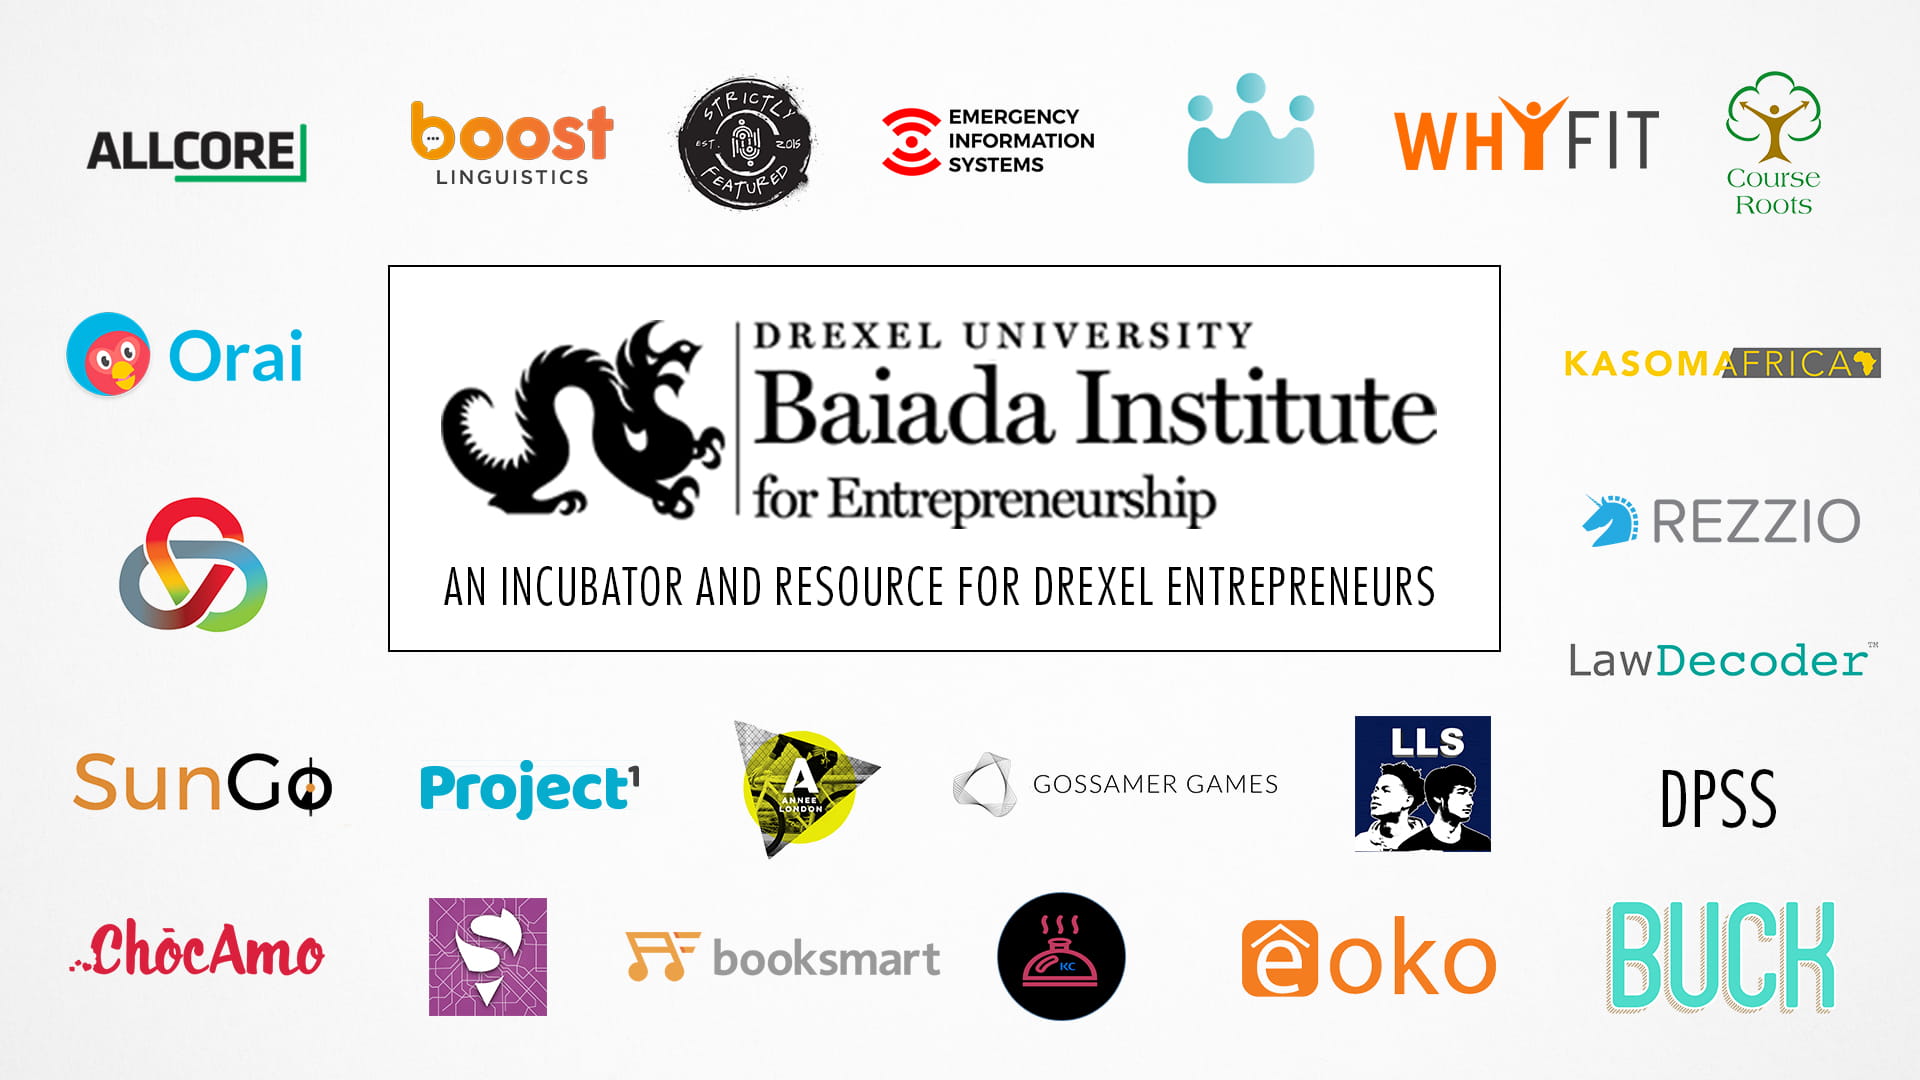 Drexel University Baiada Institute for Entrepreneurship: An Incubator and Resource for Drexel Entrepreneurs 